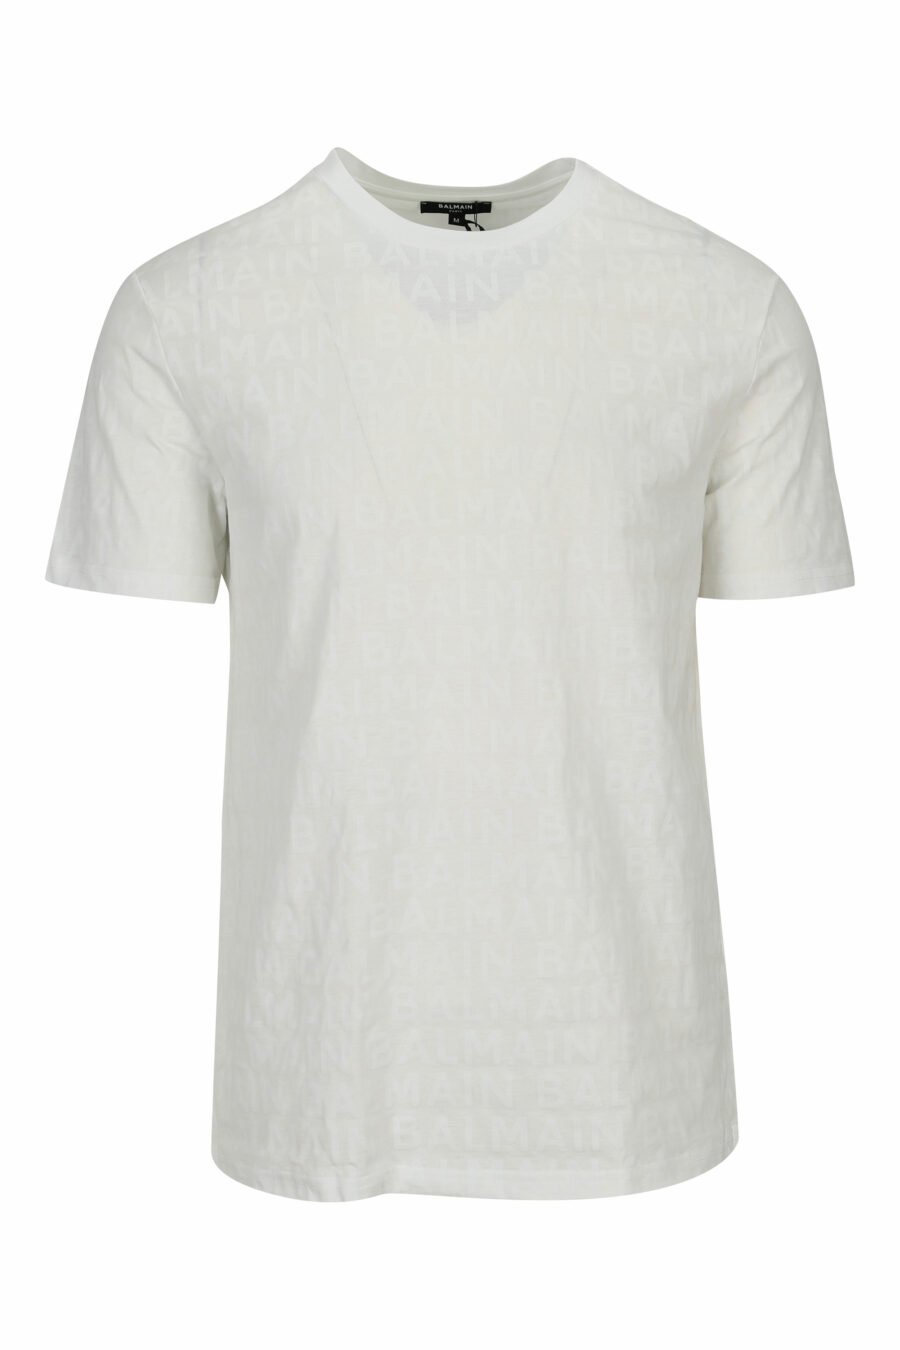 T-shirt blanc avec monogramme monochrome - 8032674525390